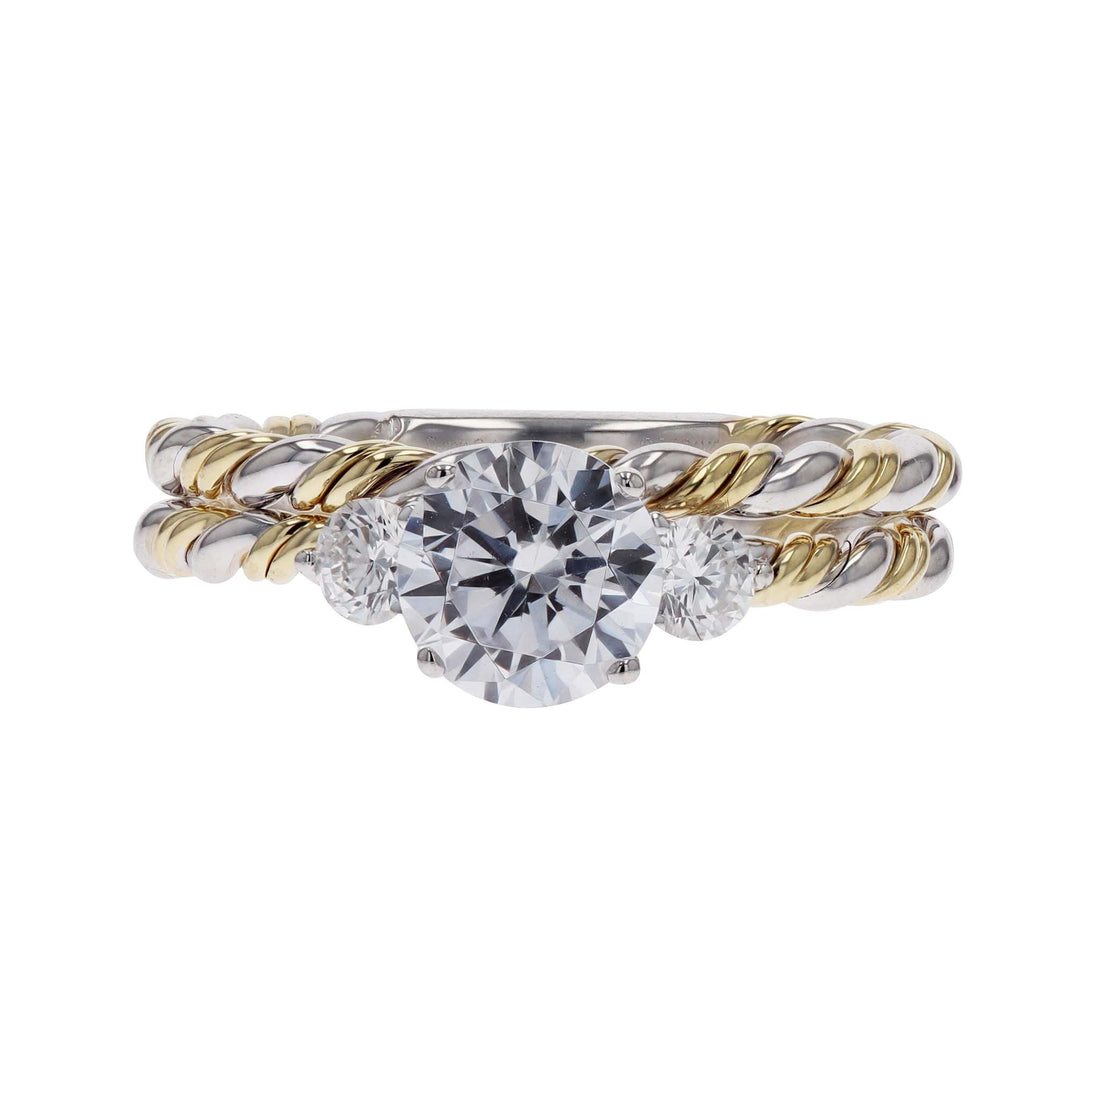 1.2 Ct Round Cut Pave Twist Infinity Rope Diamond Engagement Ring VS2 G  Treated | eBay